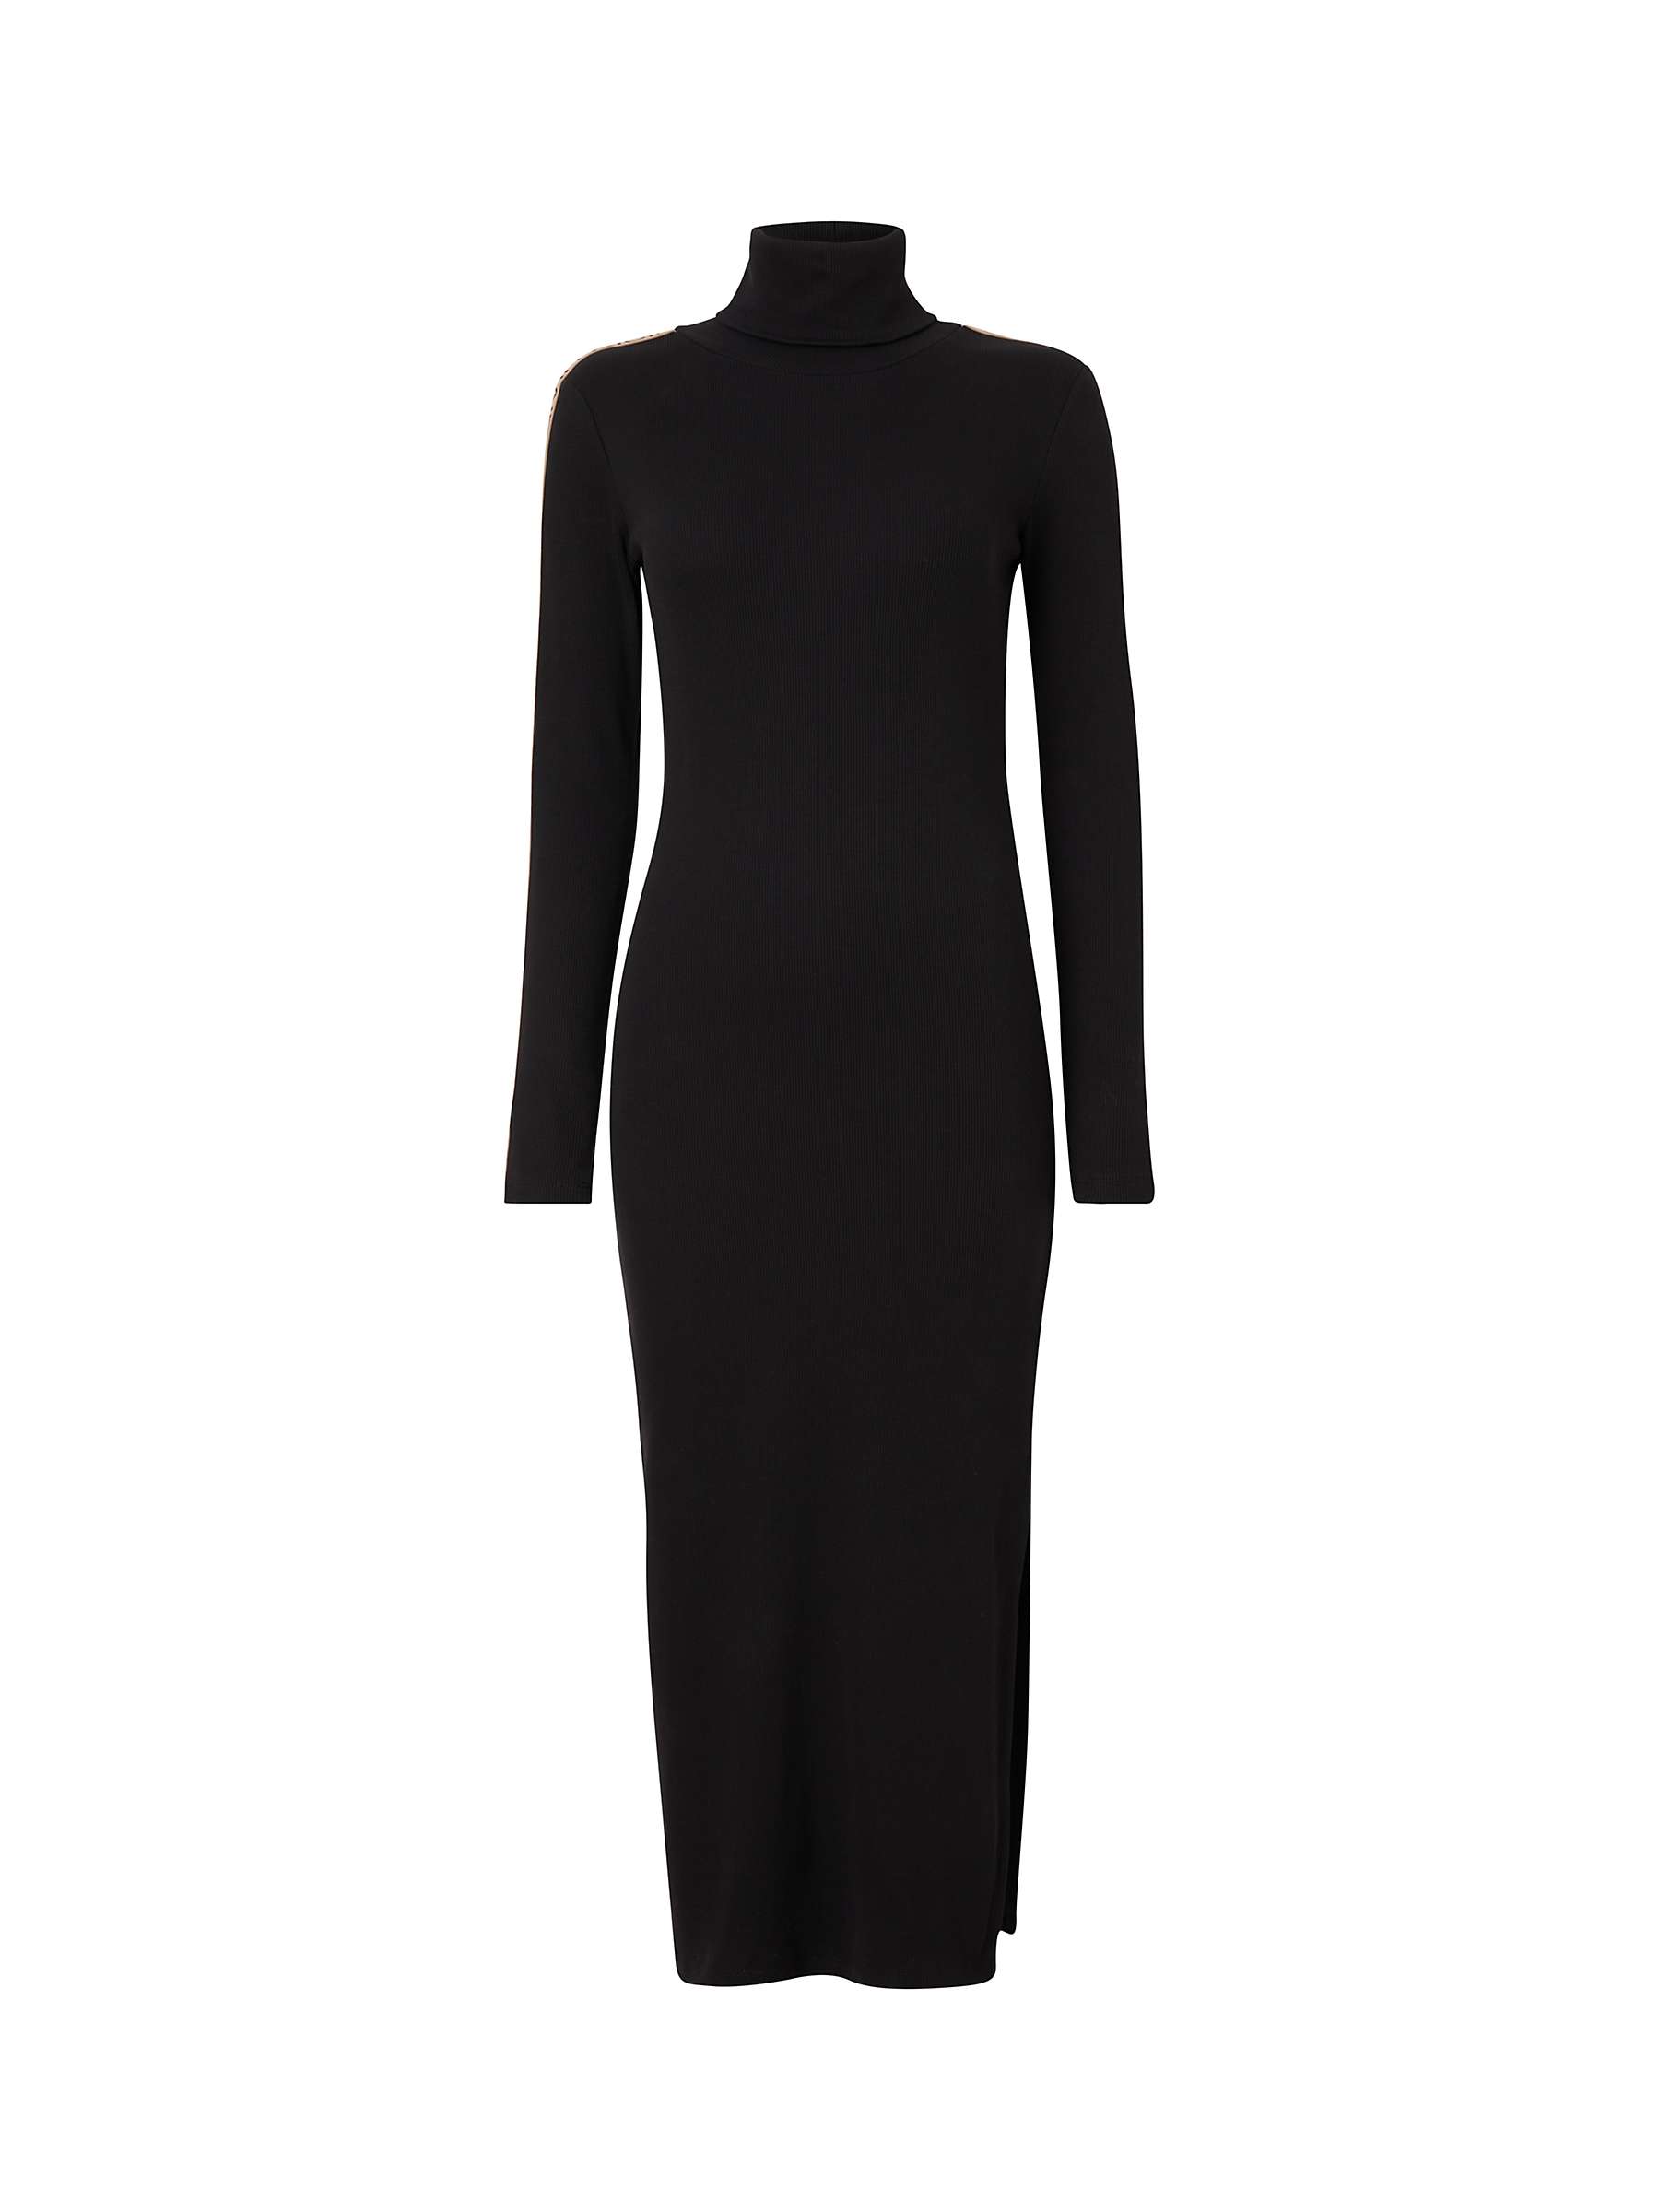 Calvin Klein Roll Neck Rib Dress, Ck Black at John Lewis & Partners